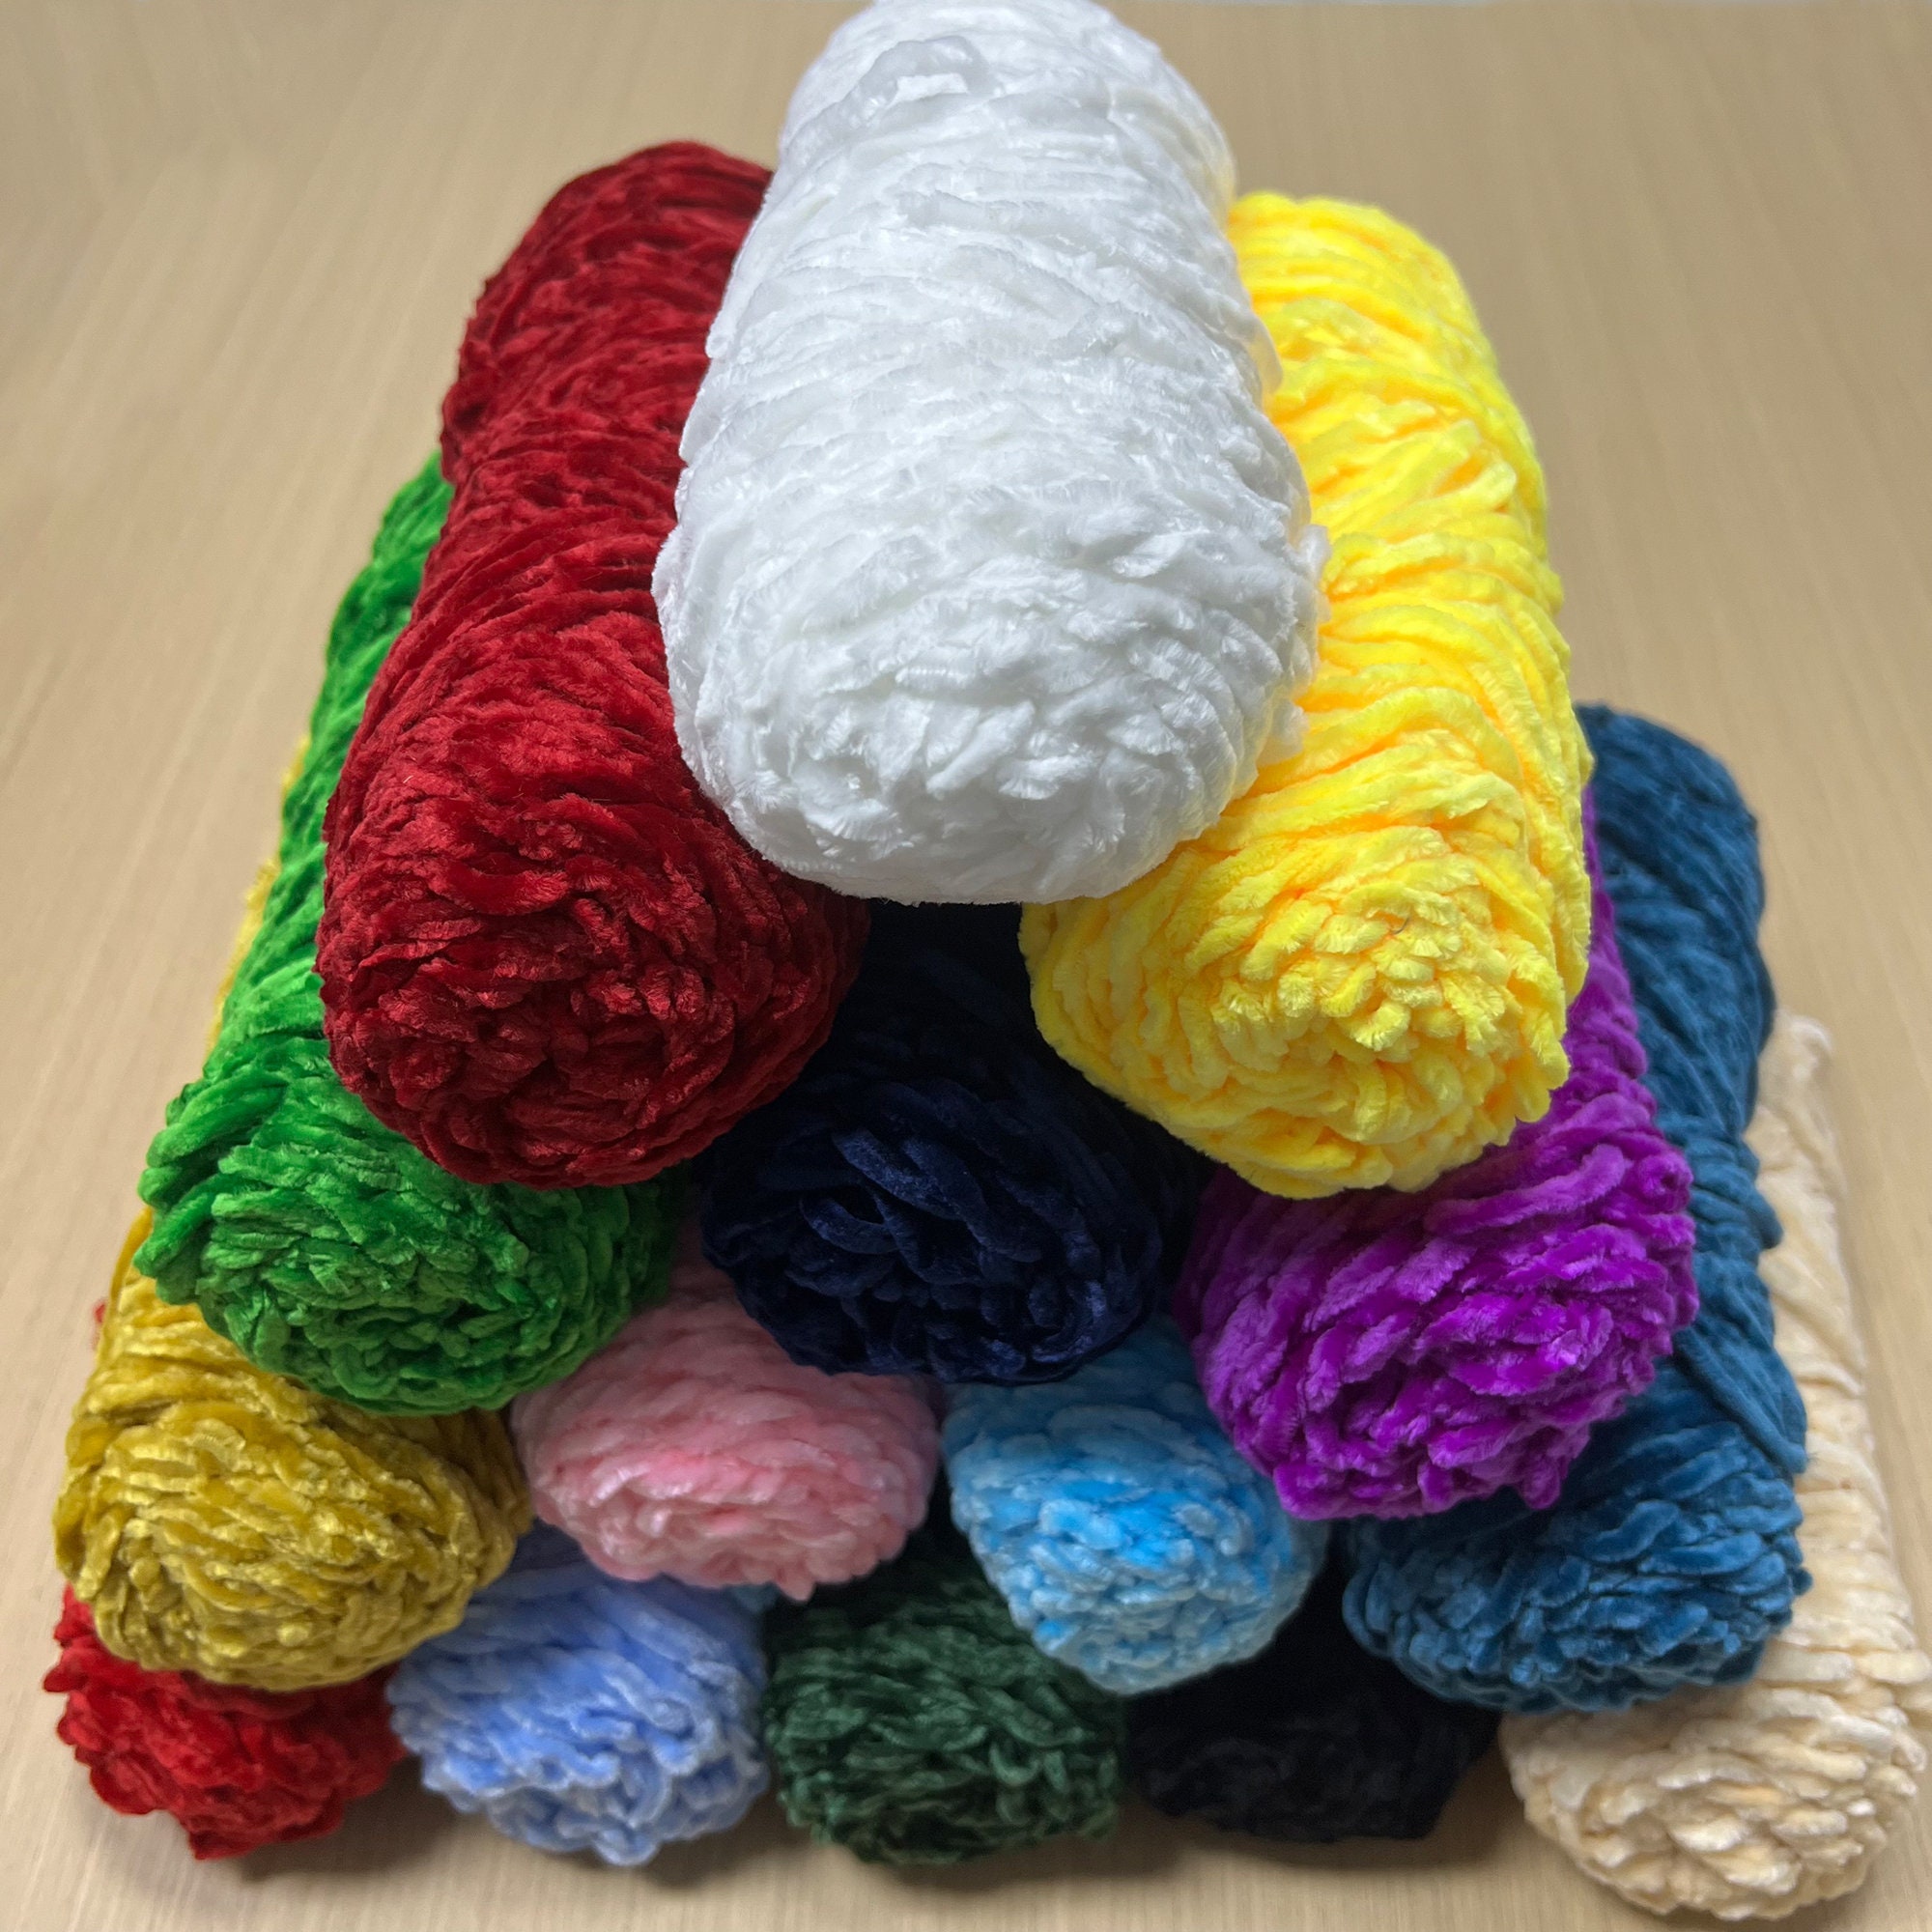 Alize Velluto Yarn 5 Pieces Chunky Baby Soft Bulky Thick Knitting Crochet  Toys Velvet Chenille Amigurumi Wool Cotton Merino Milk - AliExpress